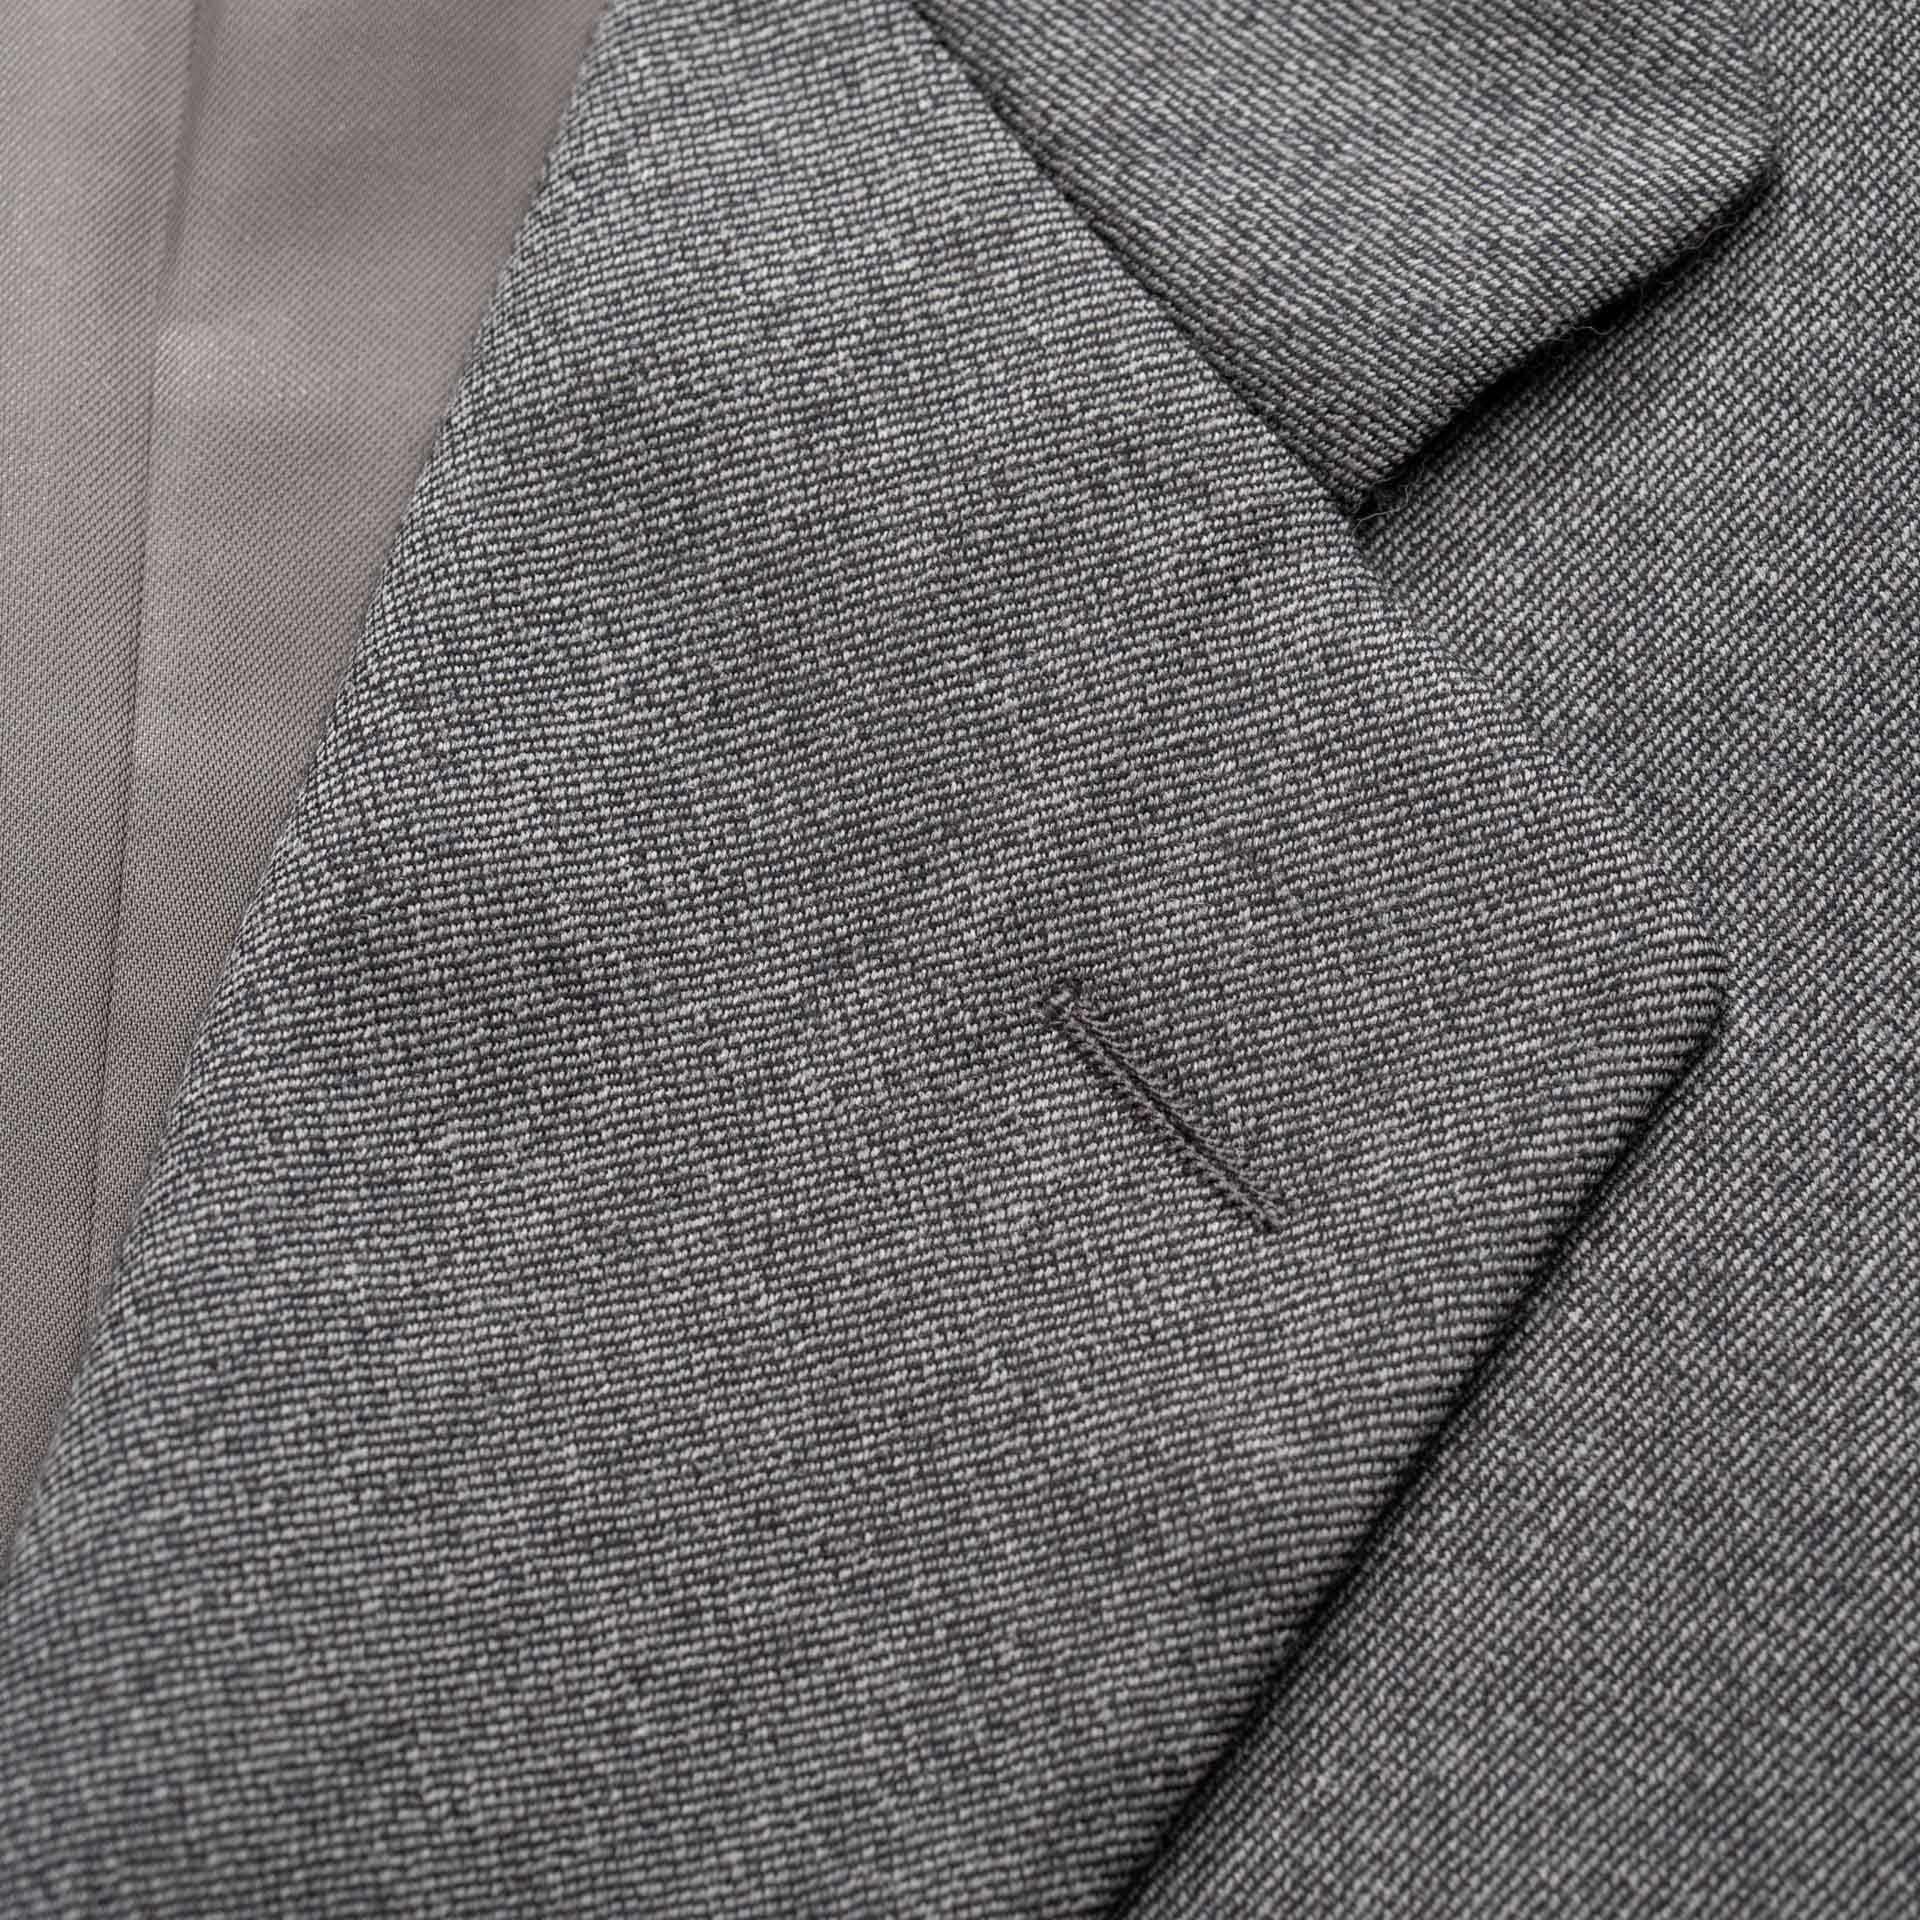 SARTORIA CASTANGIA Gray Wool Jacket Sport Coat EU 54 NEW US 44 CASTANGIA